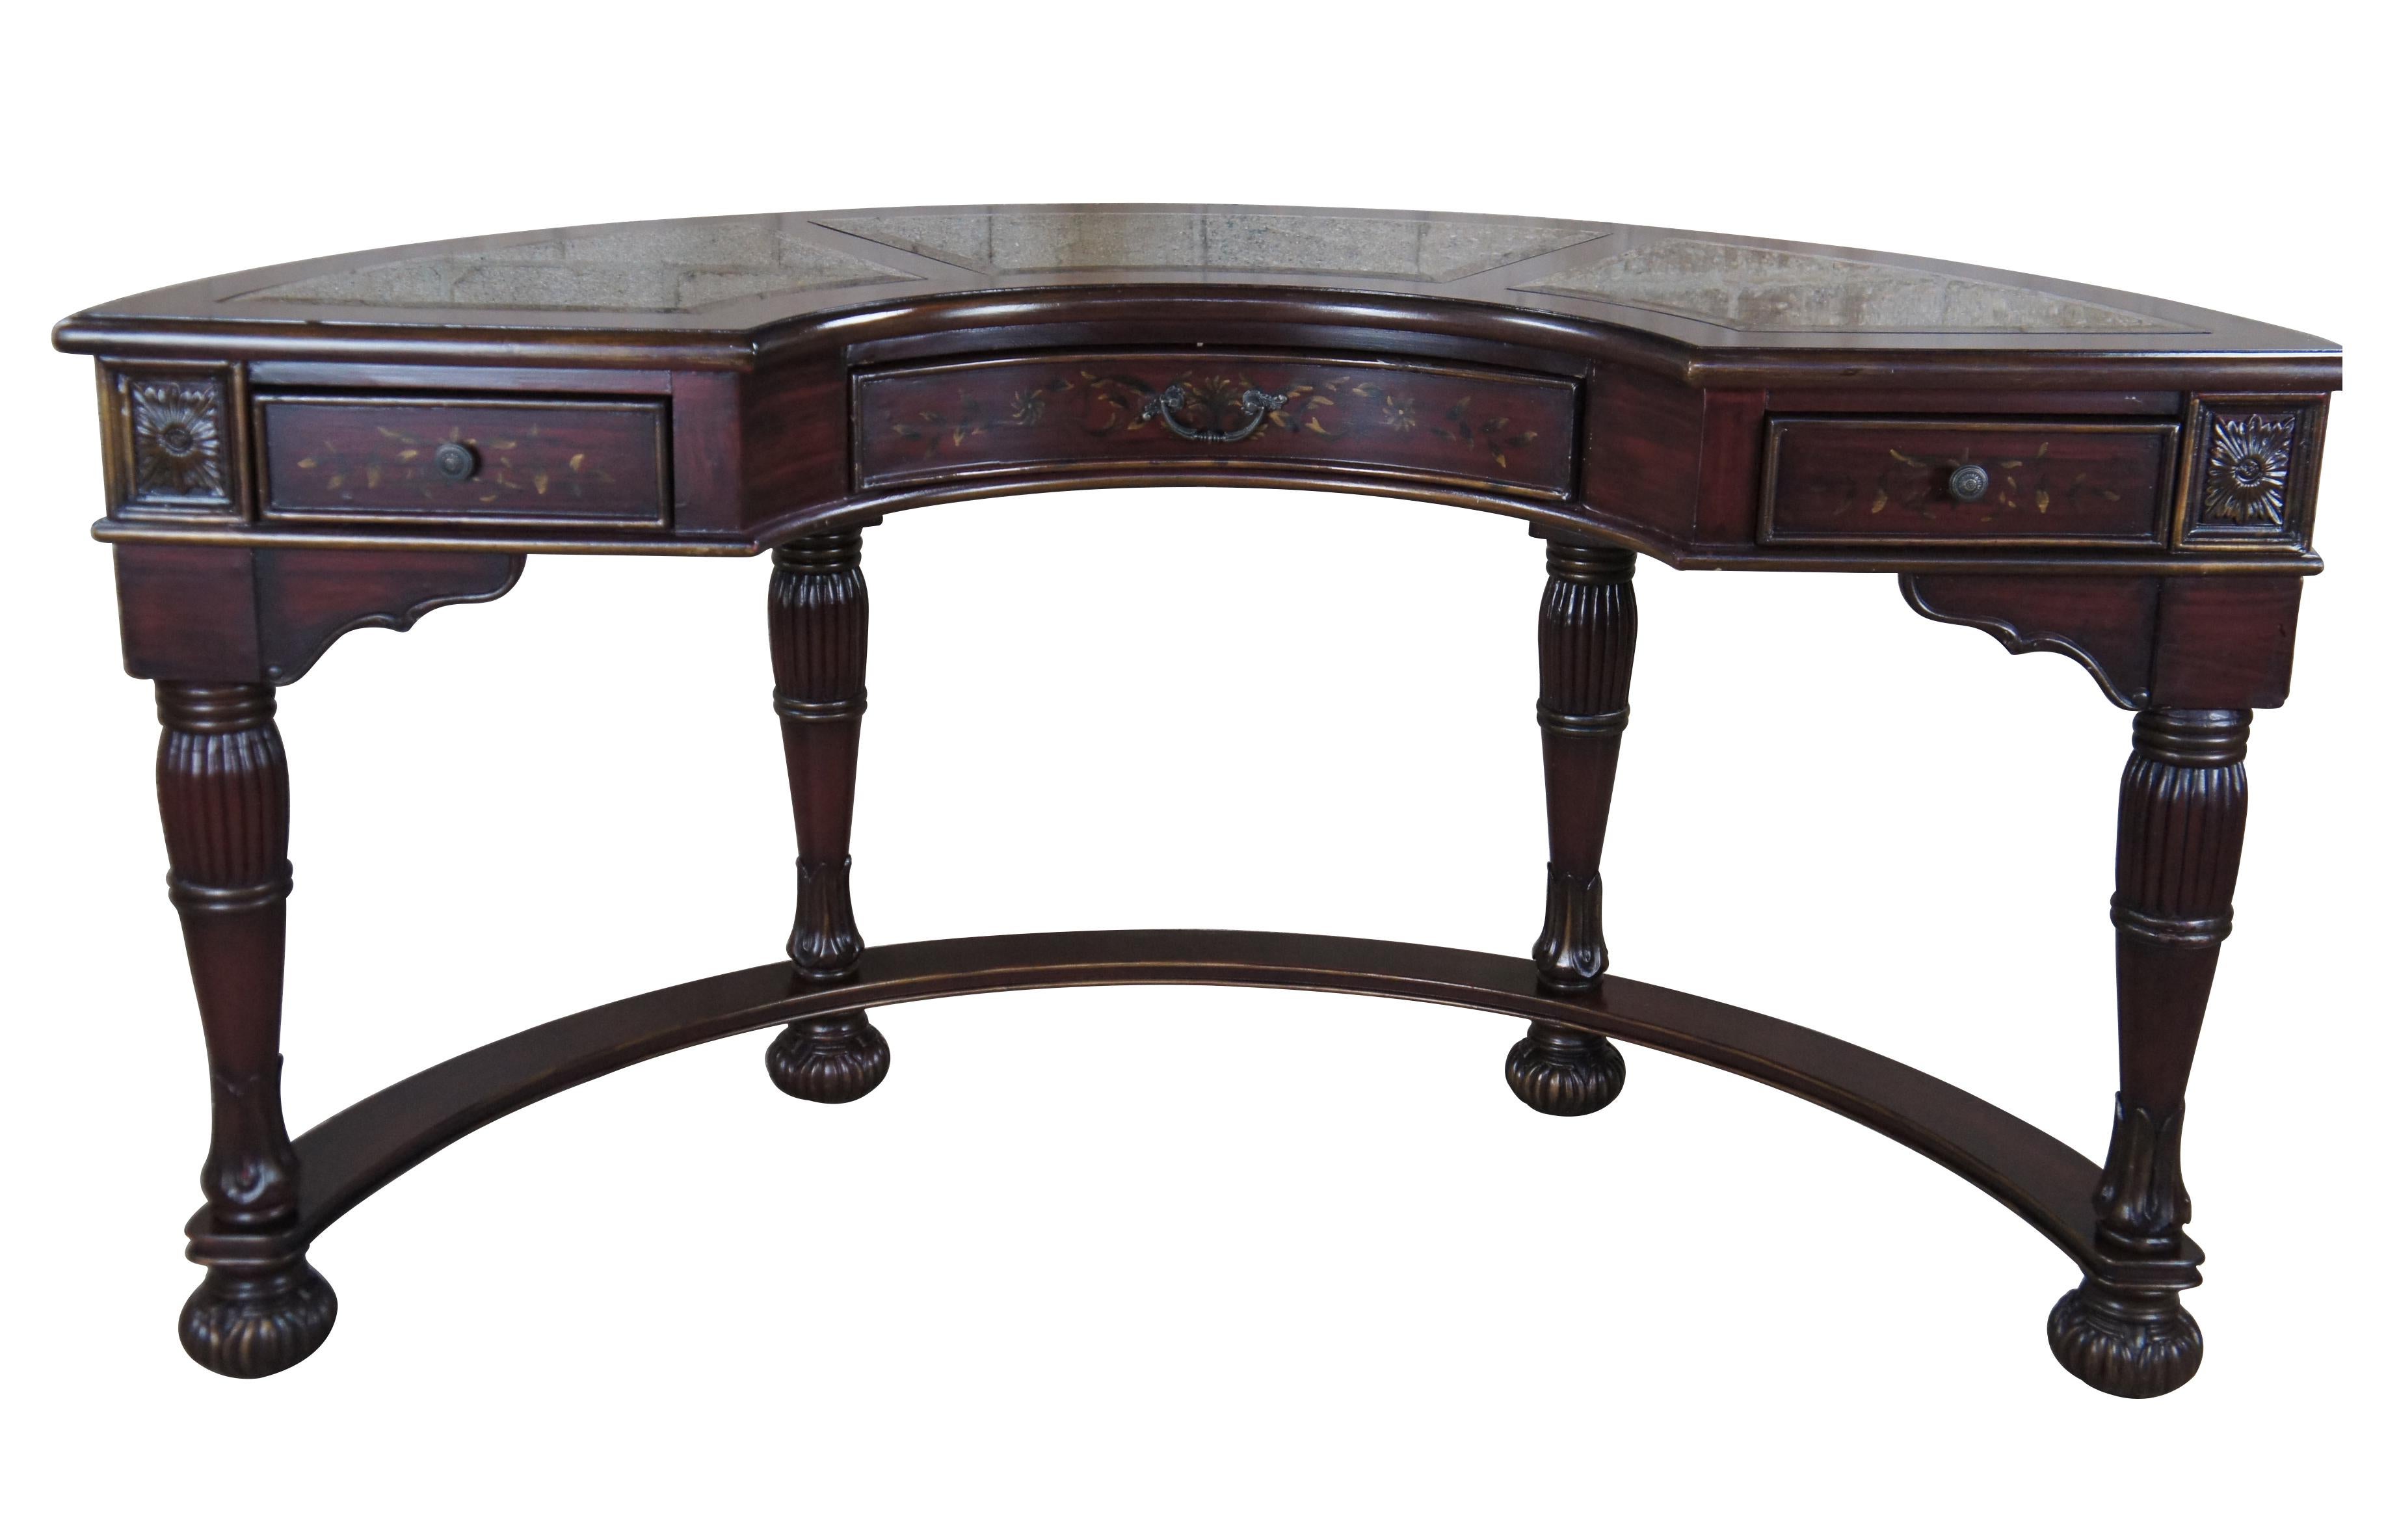 Neoclassical Revival Vintage Italian Mediterranean Half Round Demilune Writing Table Desk 